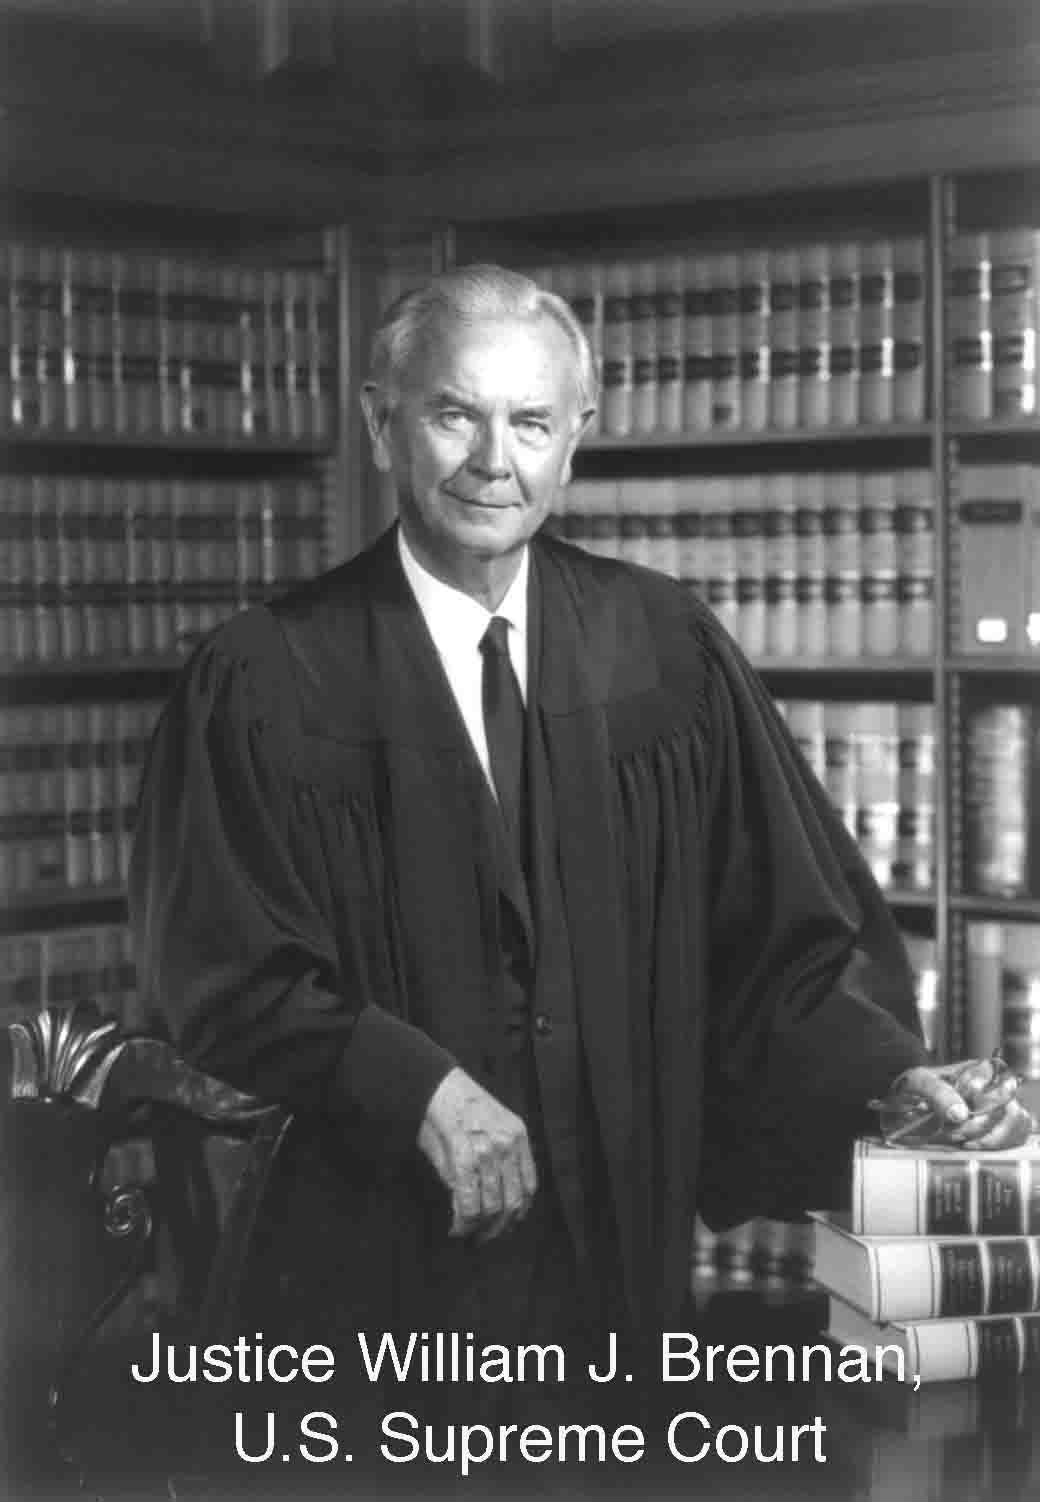 Justice William J. Brennan, U.S. Supreme Court